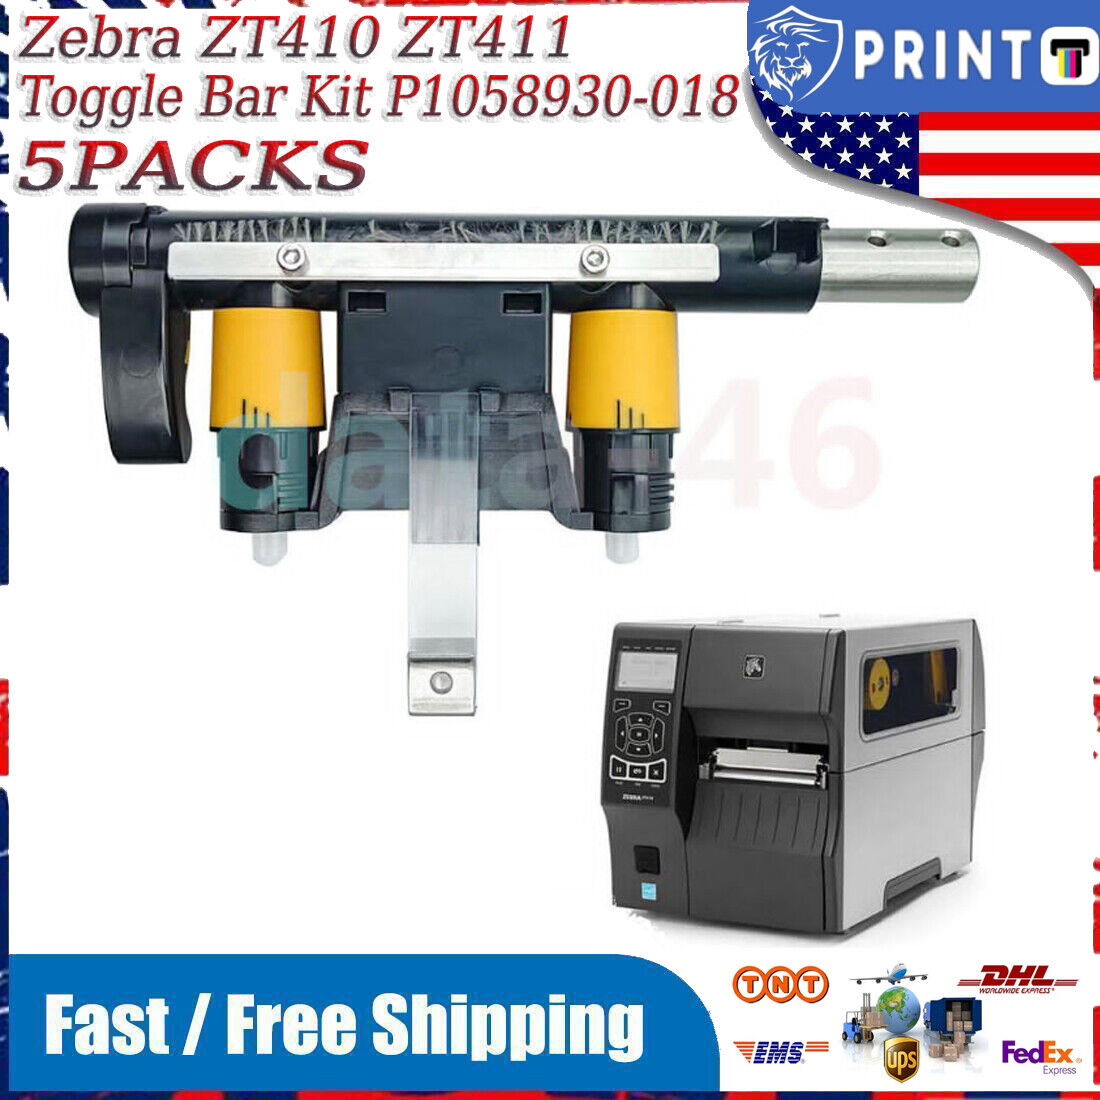 5PCS Toggle Bar Kit for Zebra ZT410 ZT411 Thermal Label Printer , P1058930-018